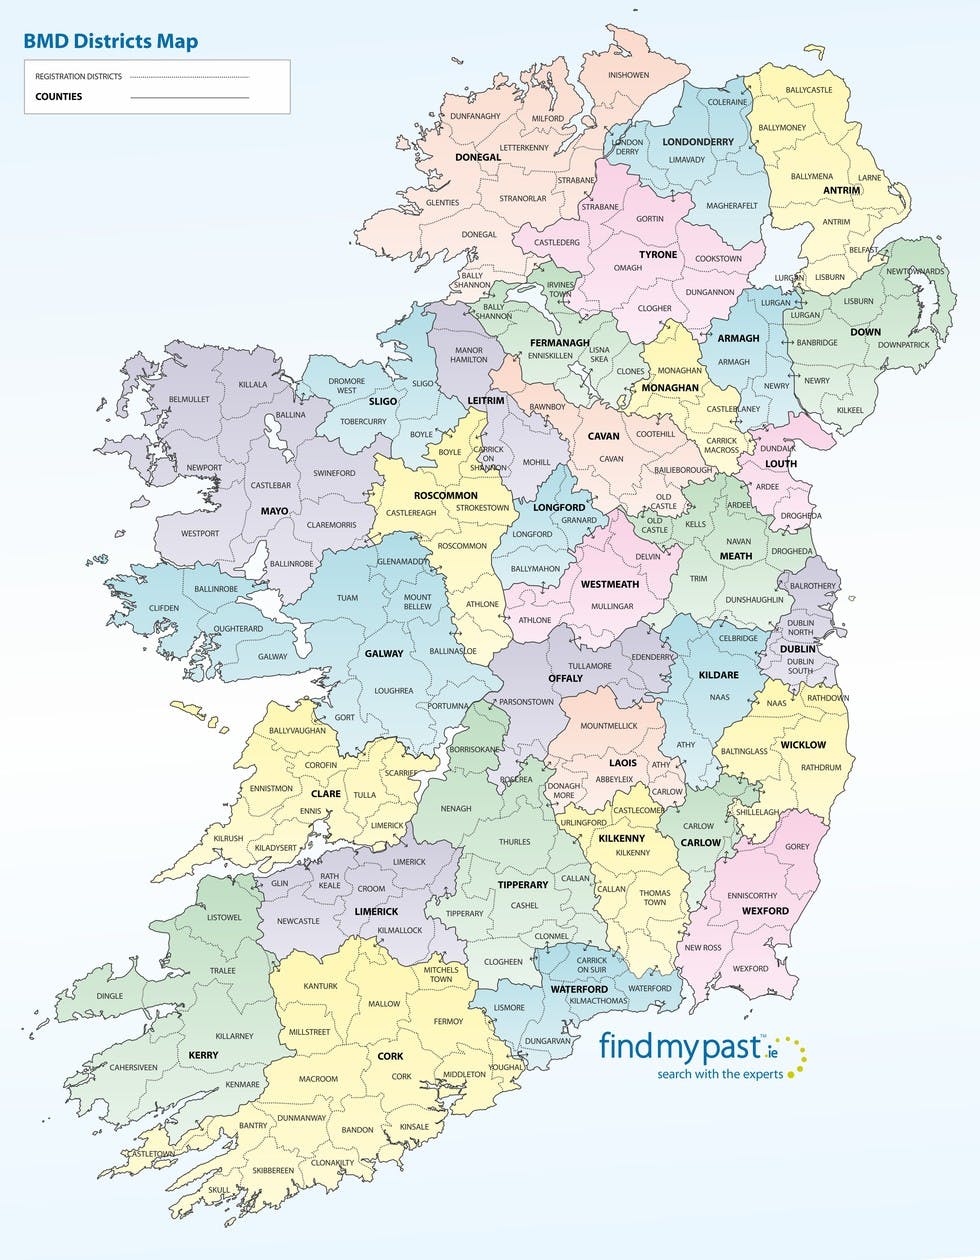 Ireland's civil registration districts